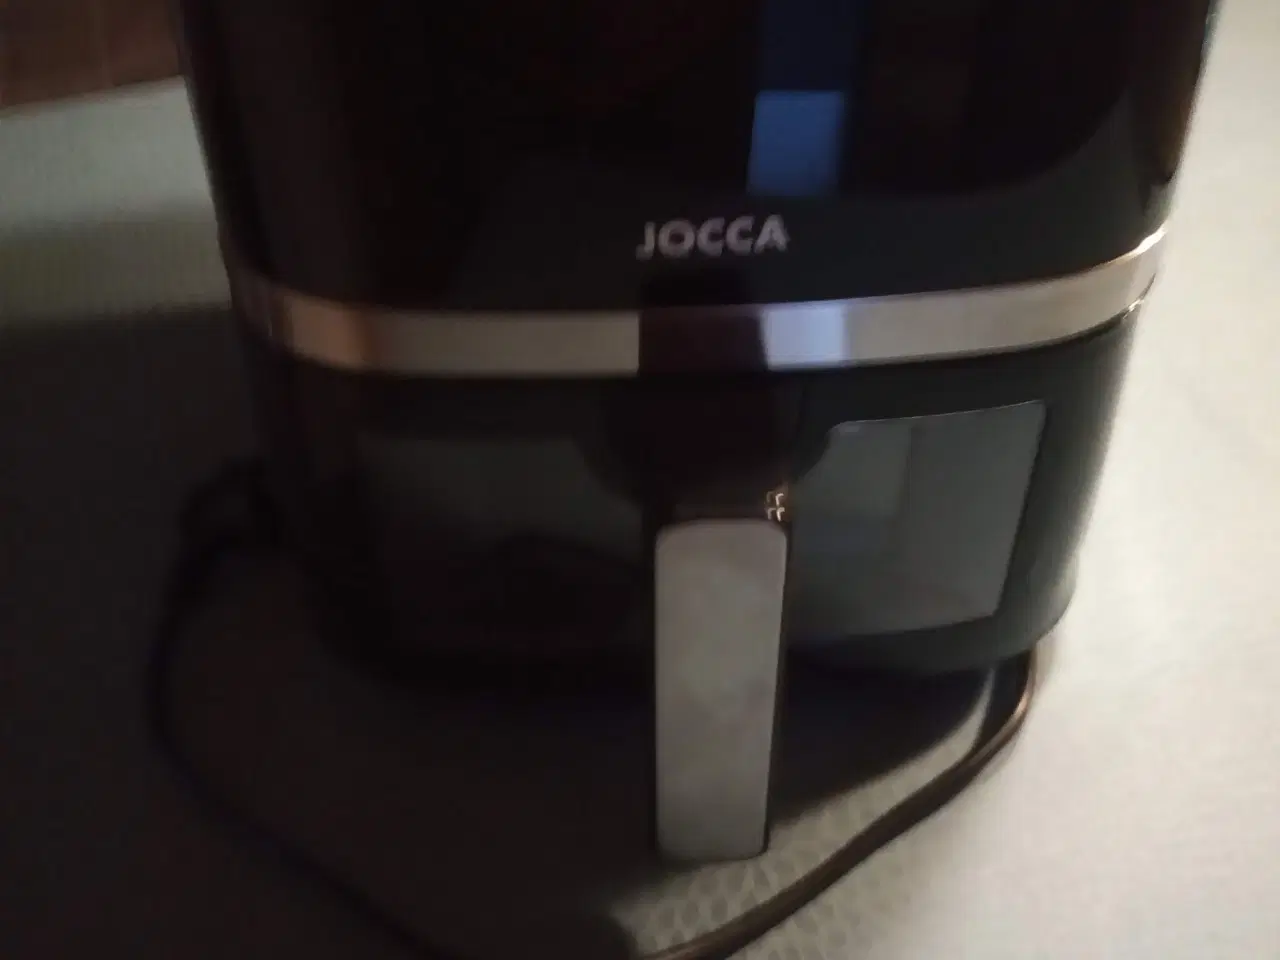 Billede 2 - Jocca airfryer sælges